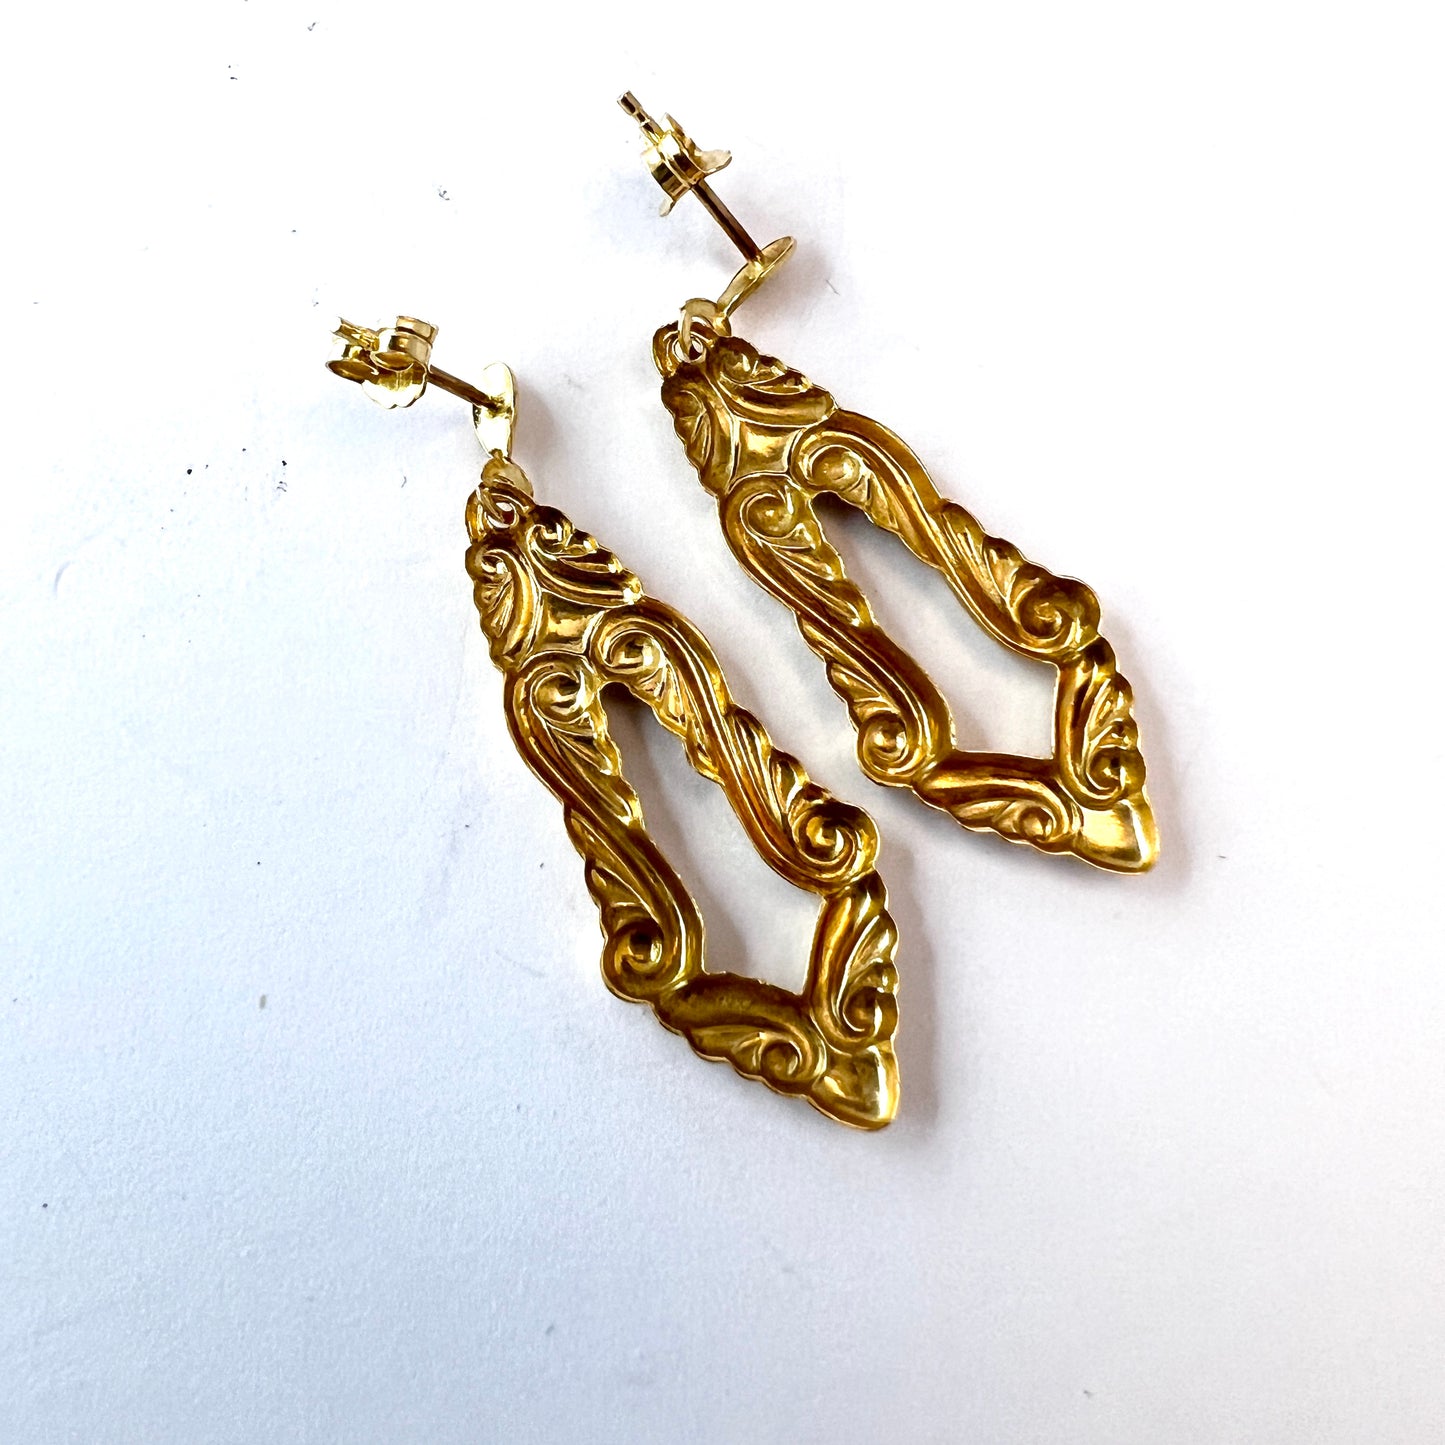 Vintage 18k Gold Earrings.